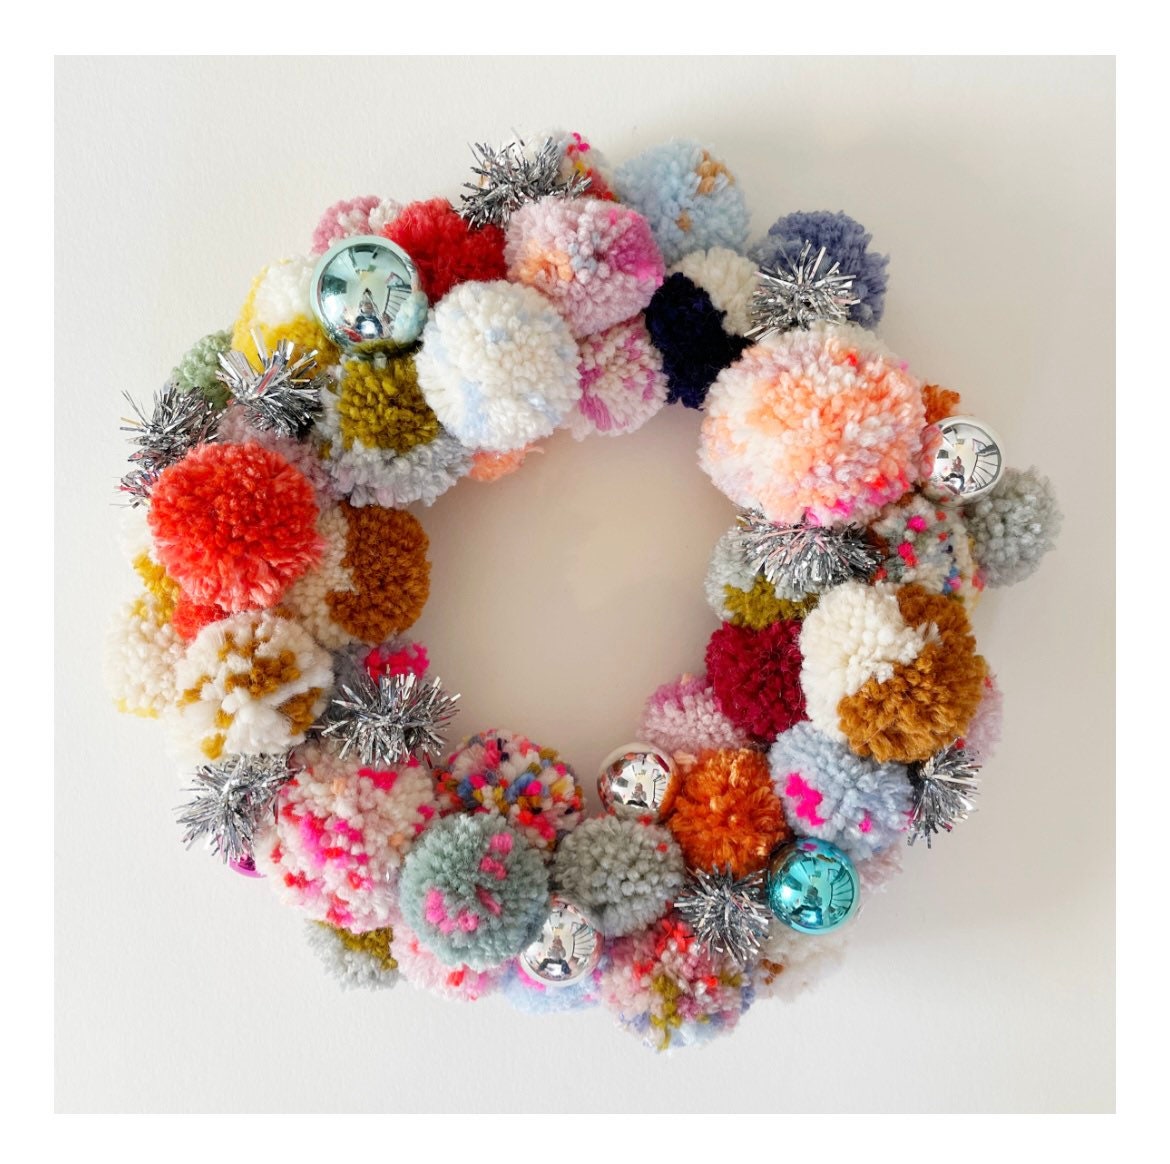 5 Minute Pom Pom Wreath Ornament Tutorial